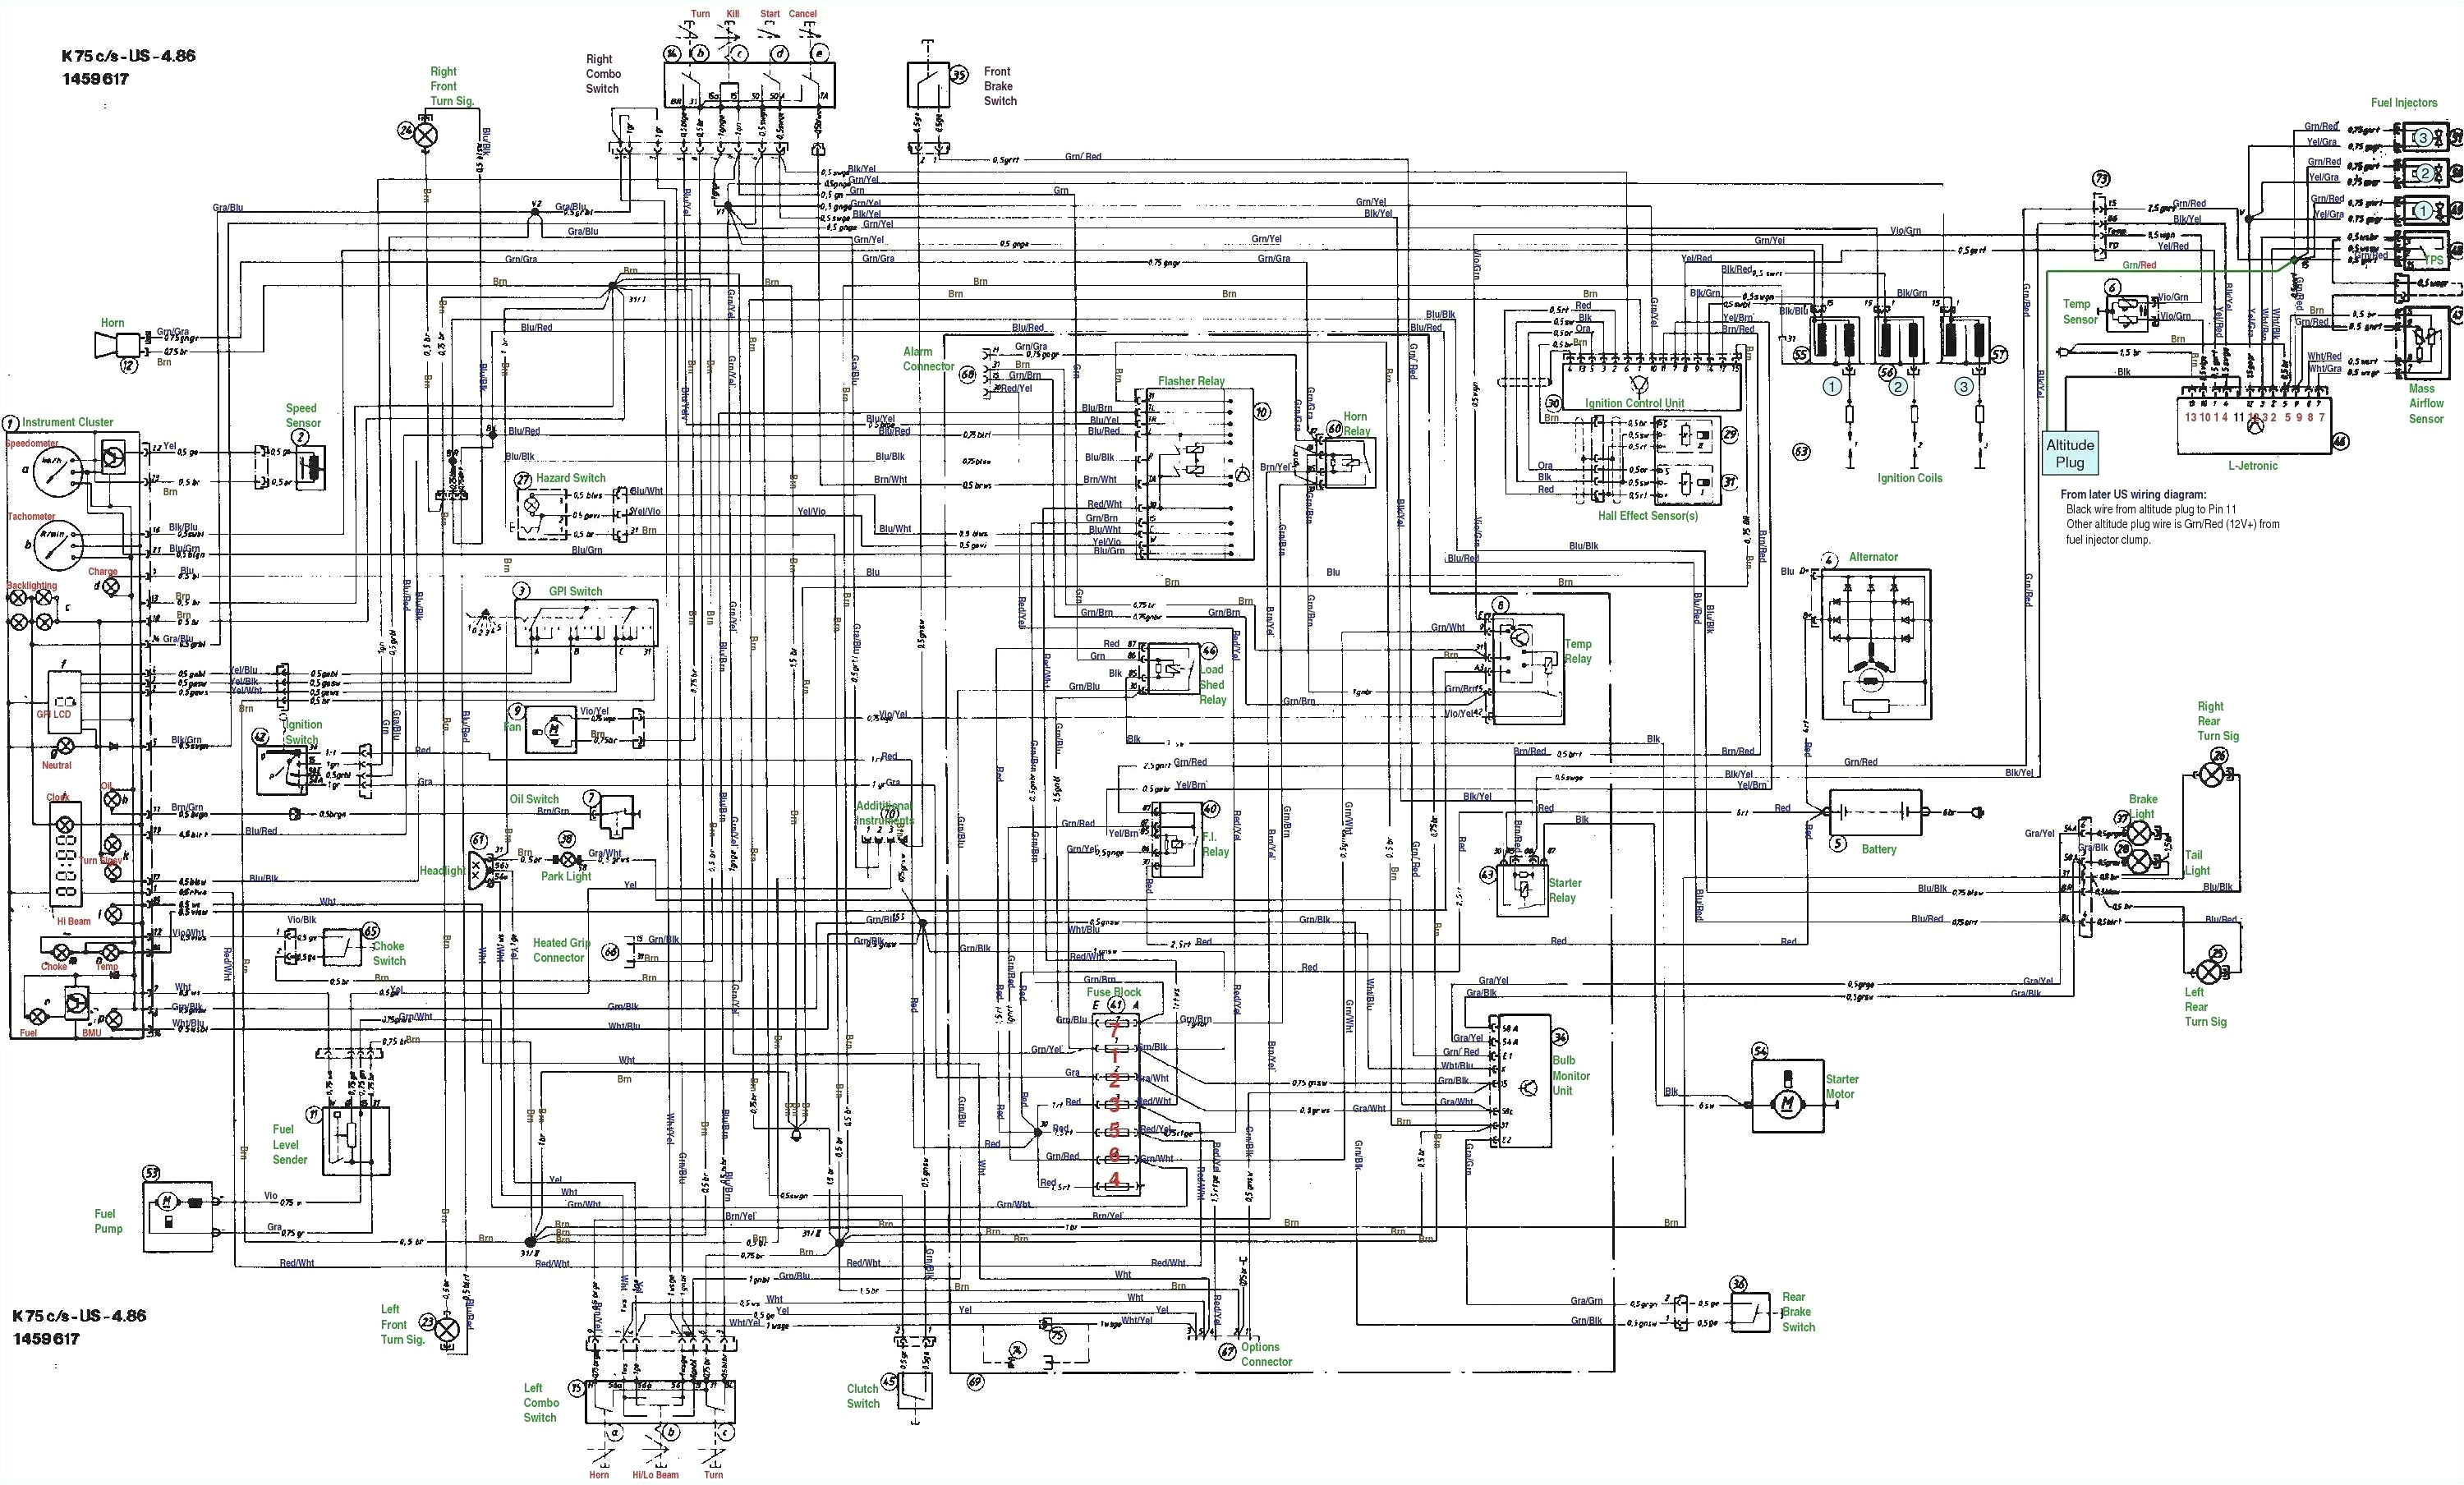 bmw wiring system diagram wiring diagram blogbmw wds 120 wiring diagram system electrical diagrams wiring bmw